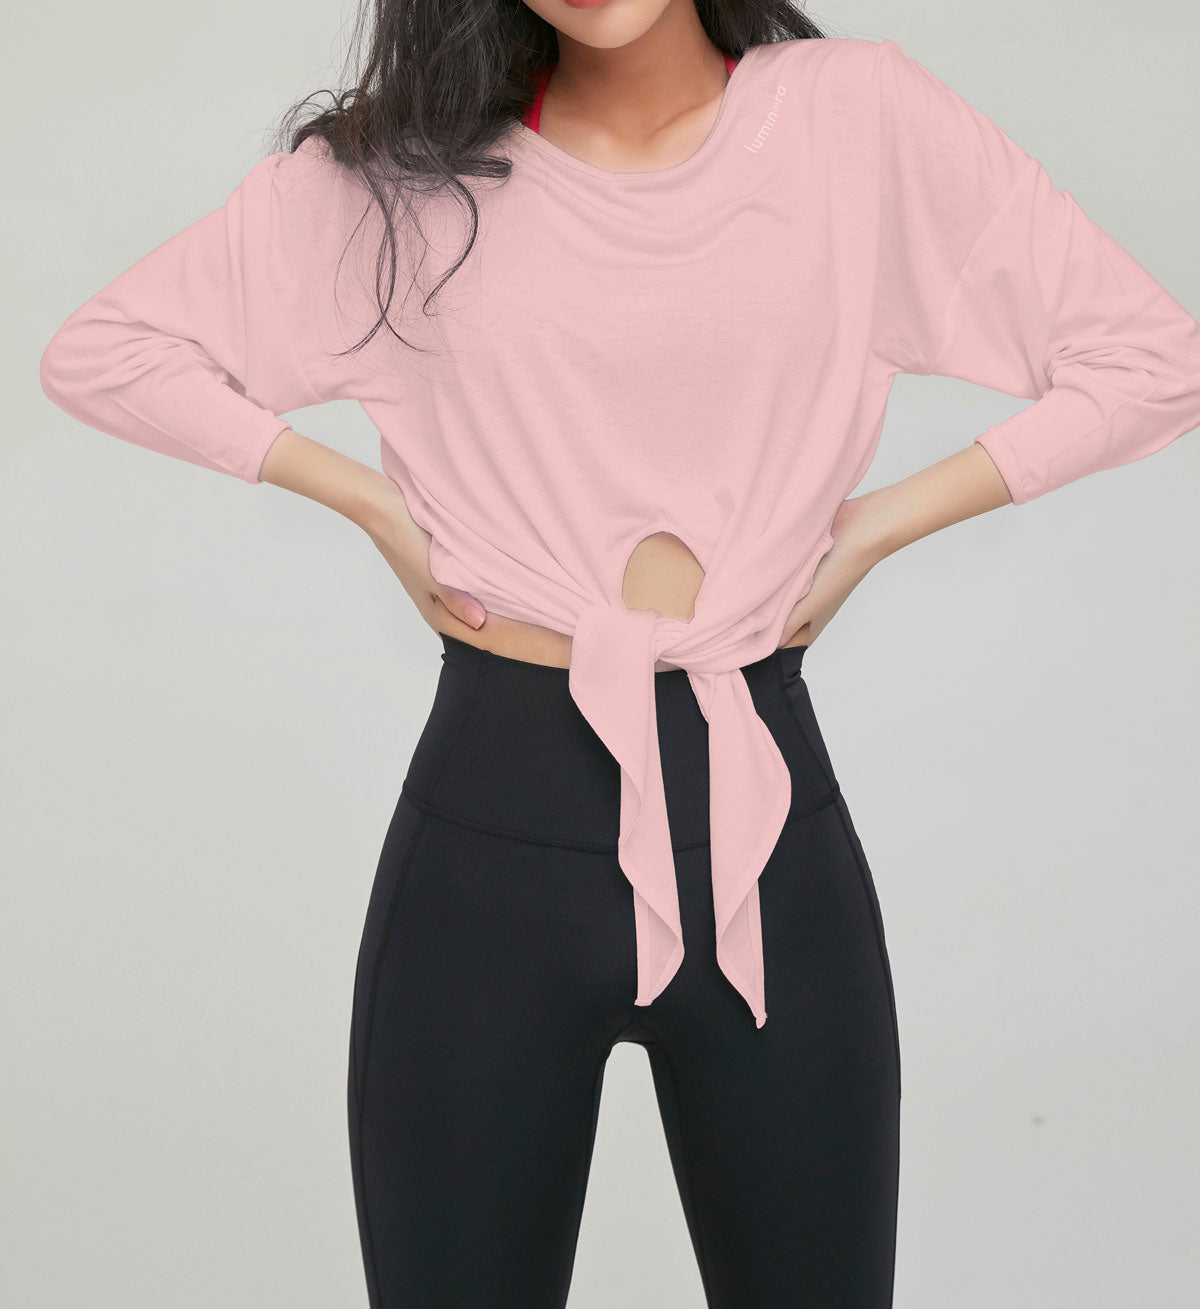 ALO YOGA Women's Raglan Sleeve Cropped Sweatshirt, Pink, Small 